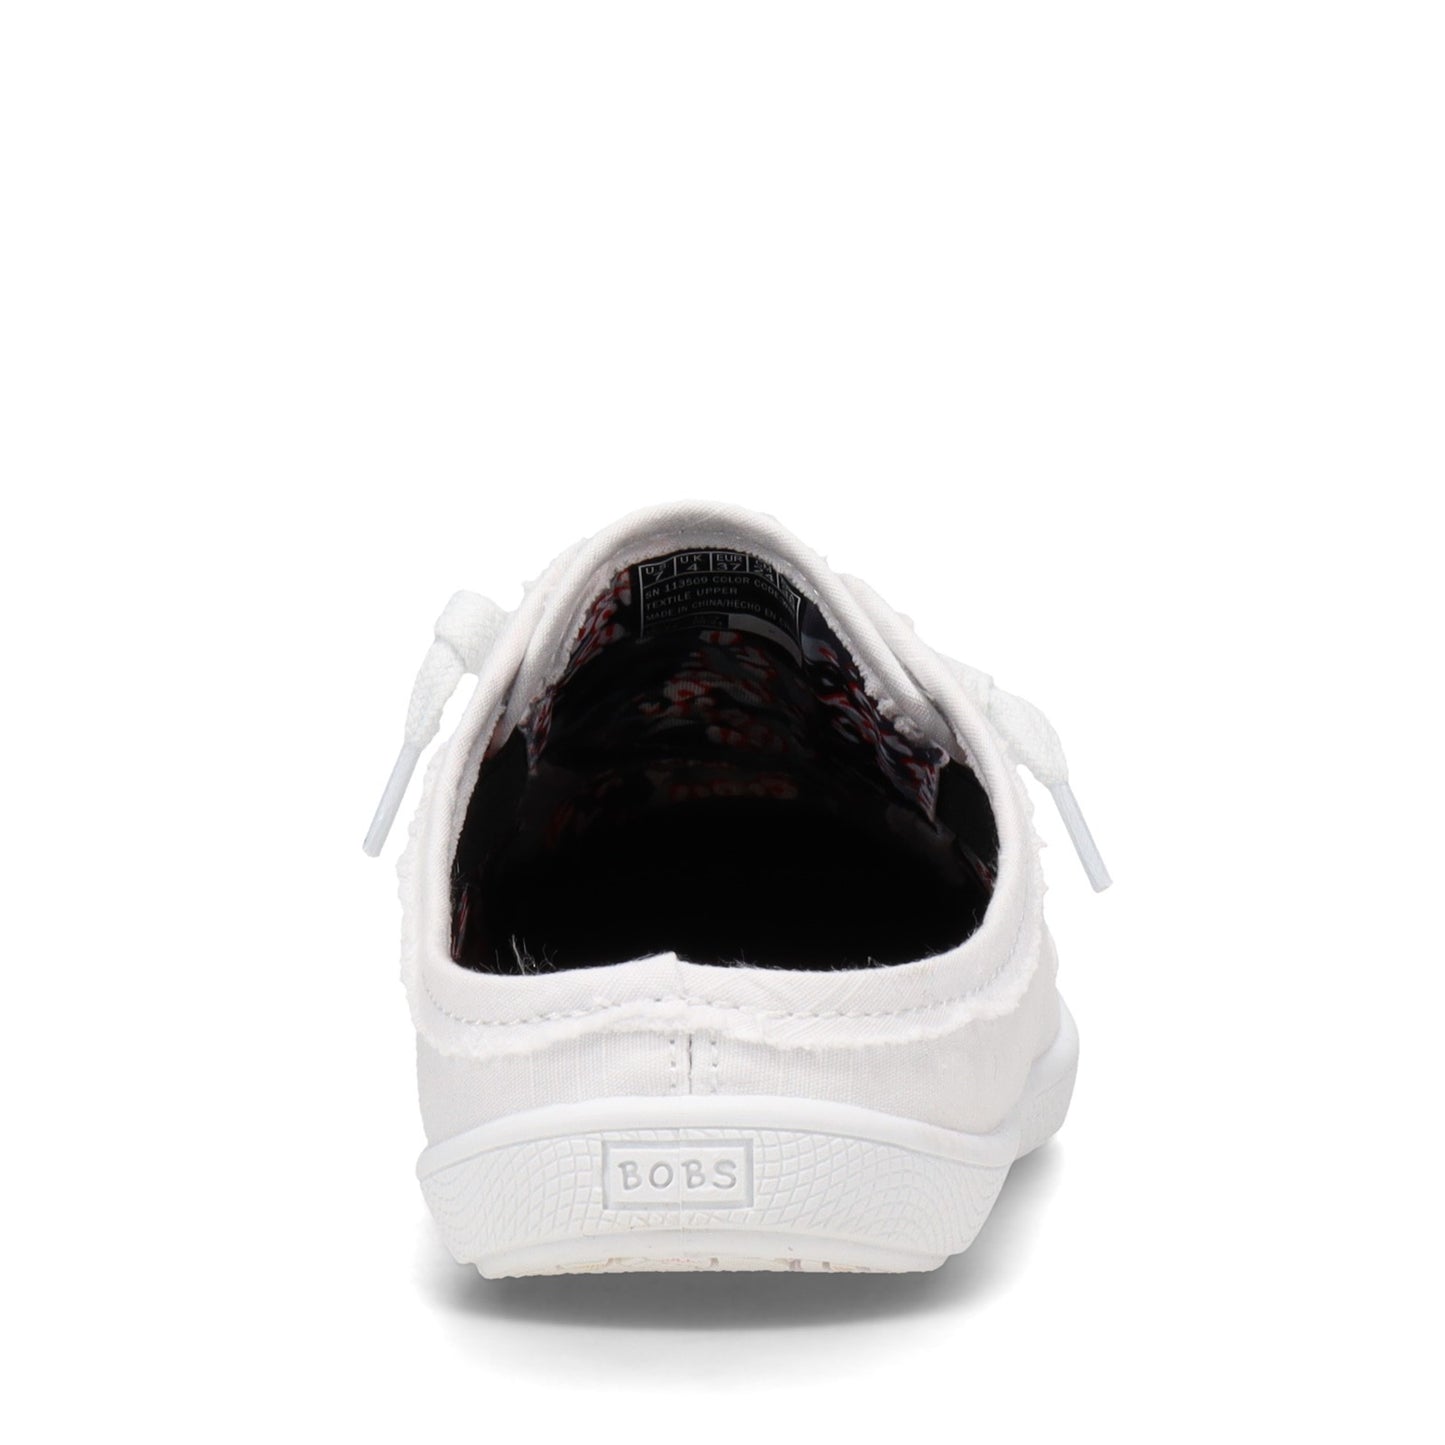 Peltz Shoes  Women's Skechers BOBS B Cute - Lemon Squeezy Slip-On Sneaker WHITE 113509-WHT